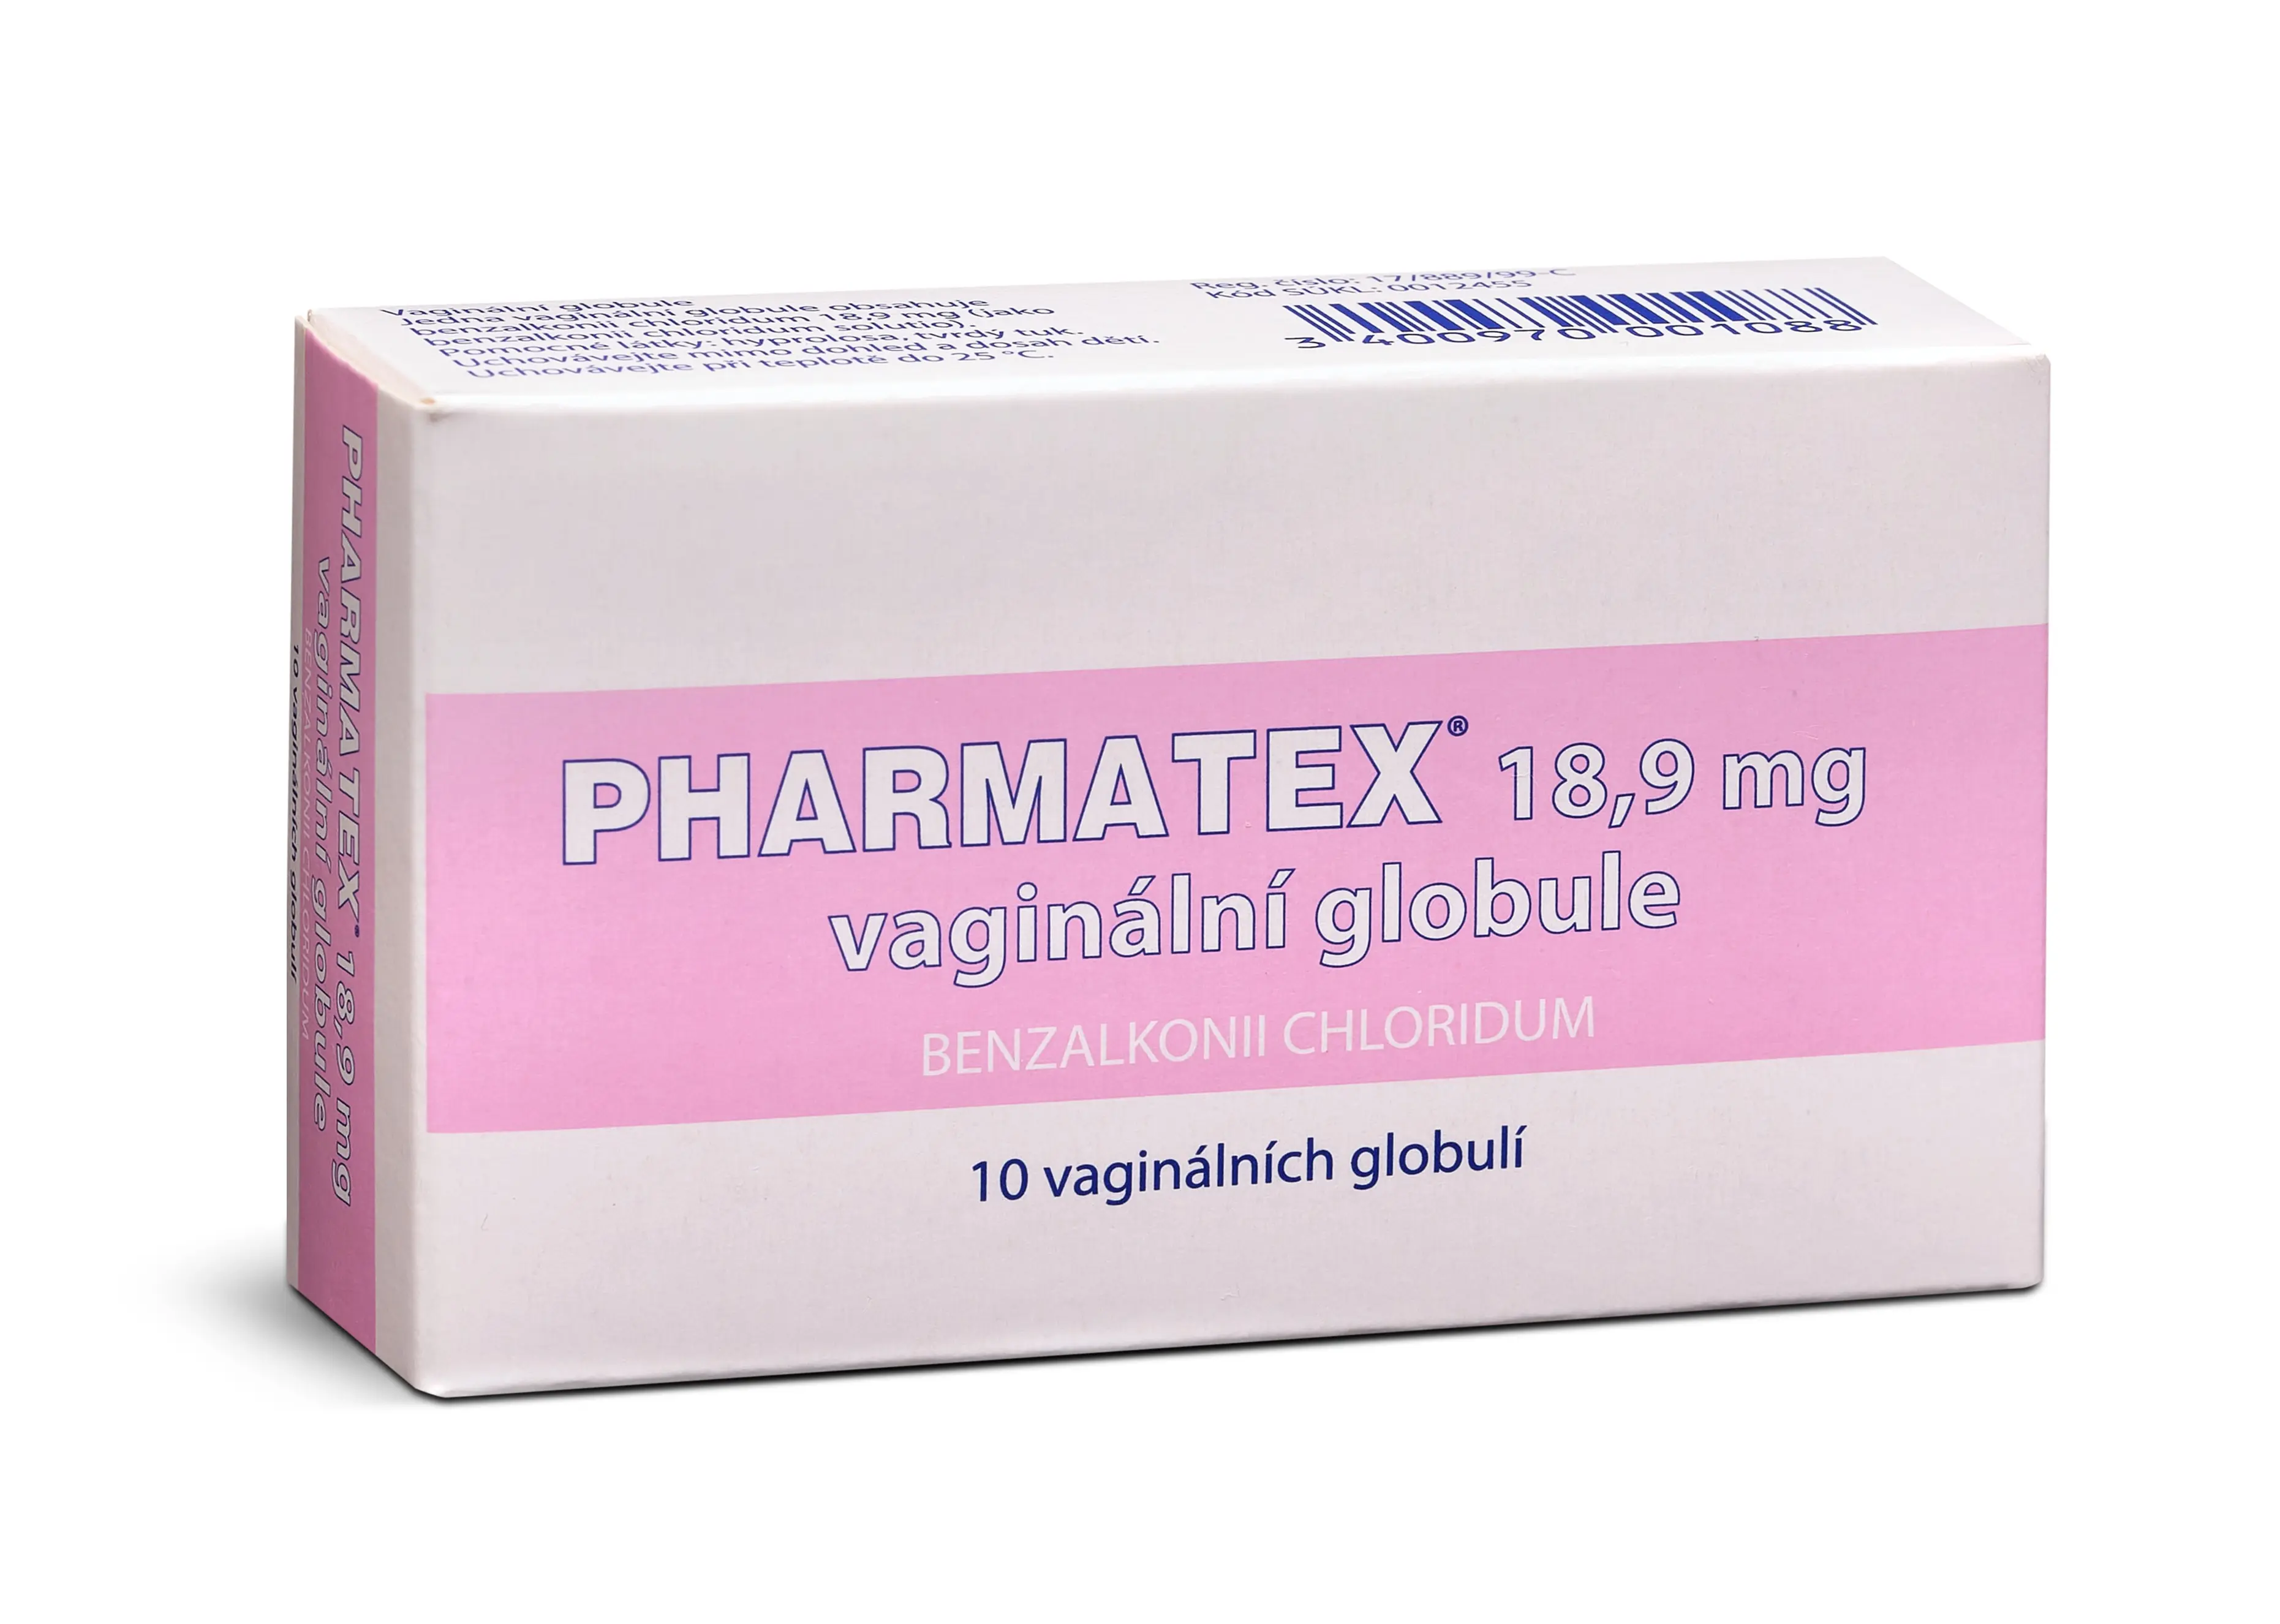 Pharmatex vaginální globule vag.glb. 10 x 18,9 mg